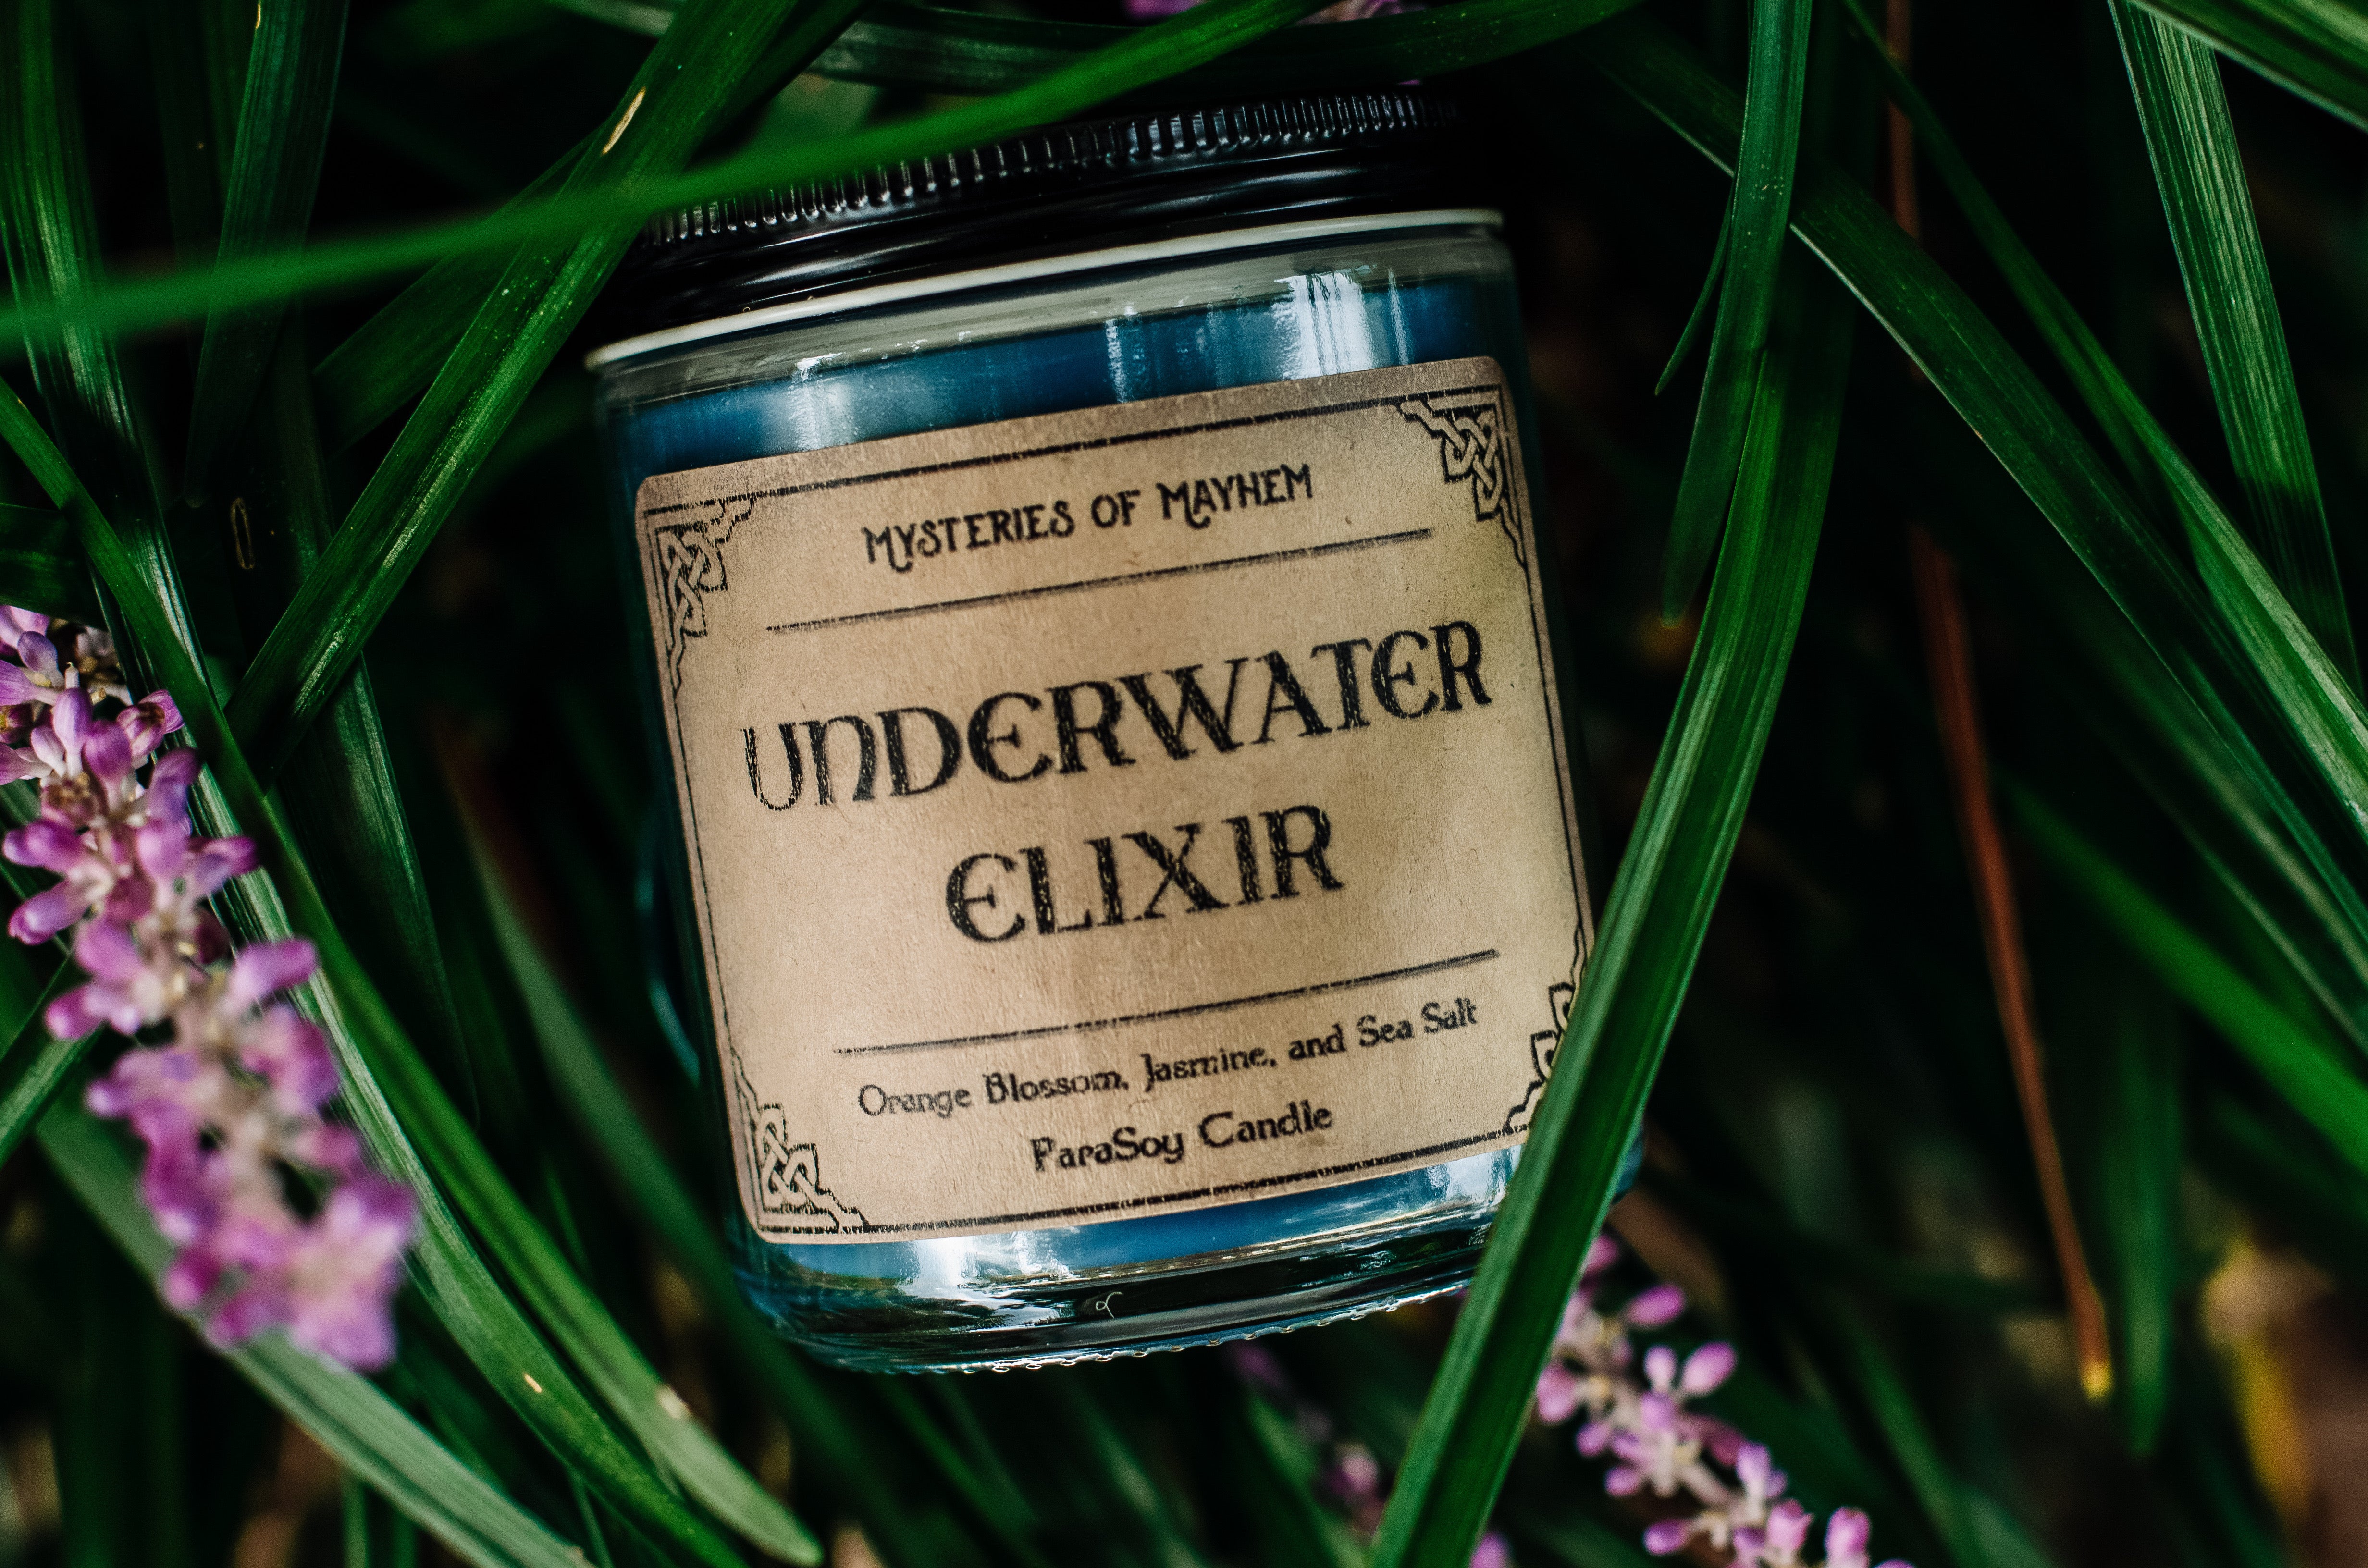 Underwater Elixir - Orange Blossom, Jasmine, and Sea Salt Scented